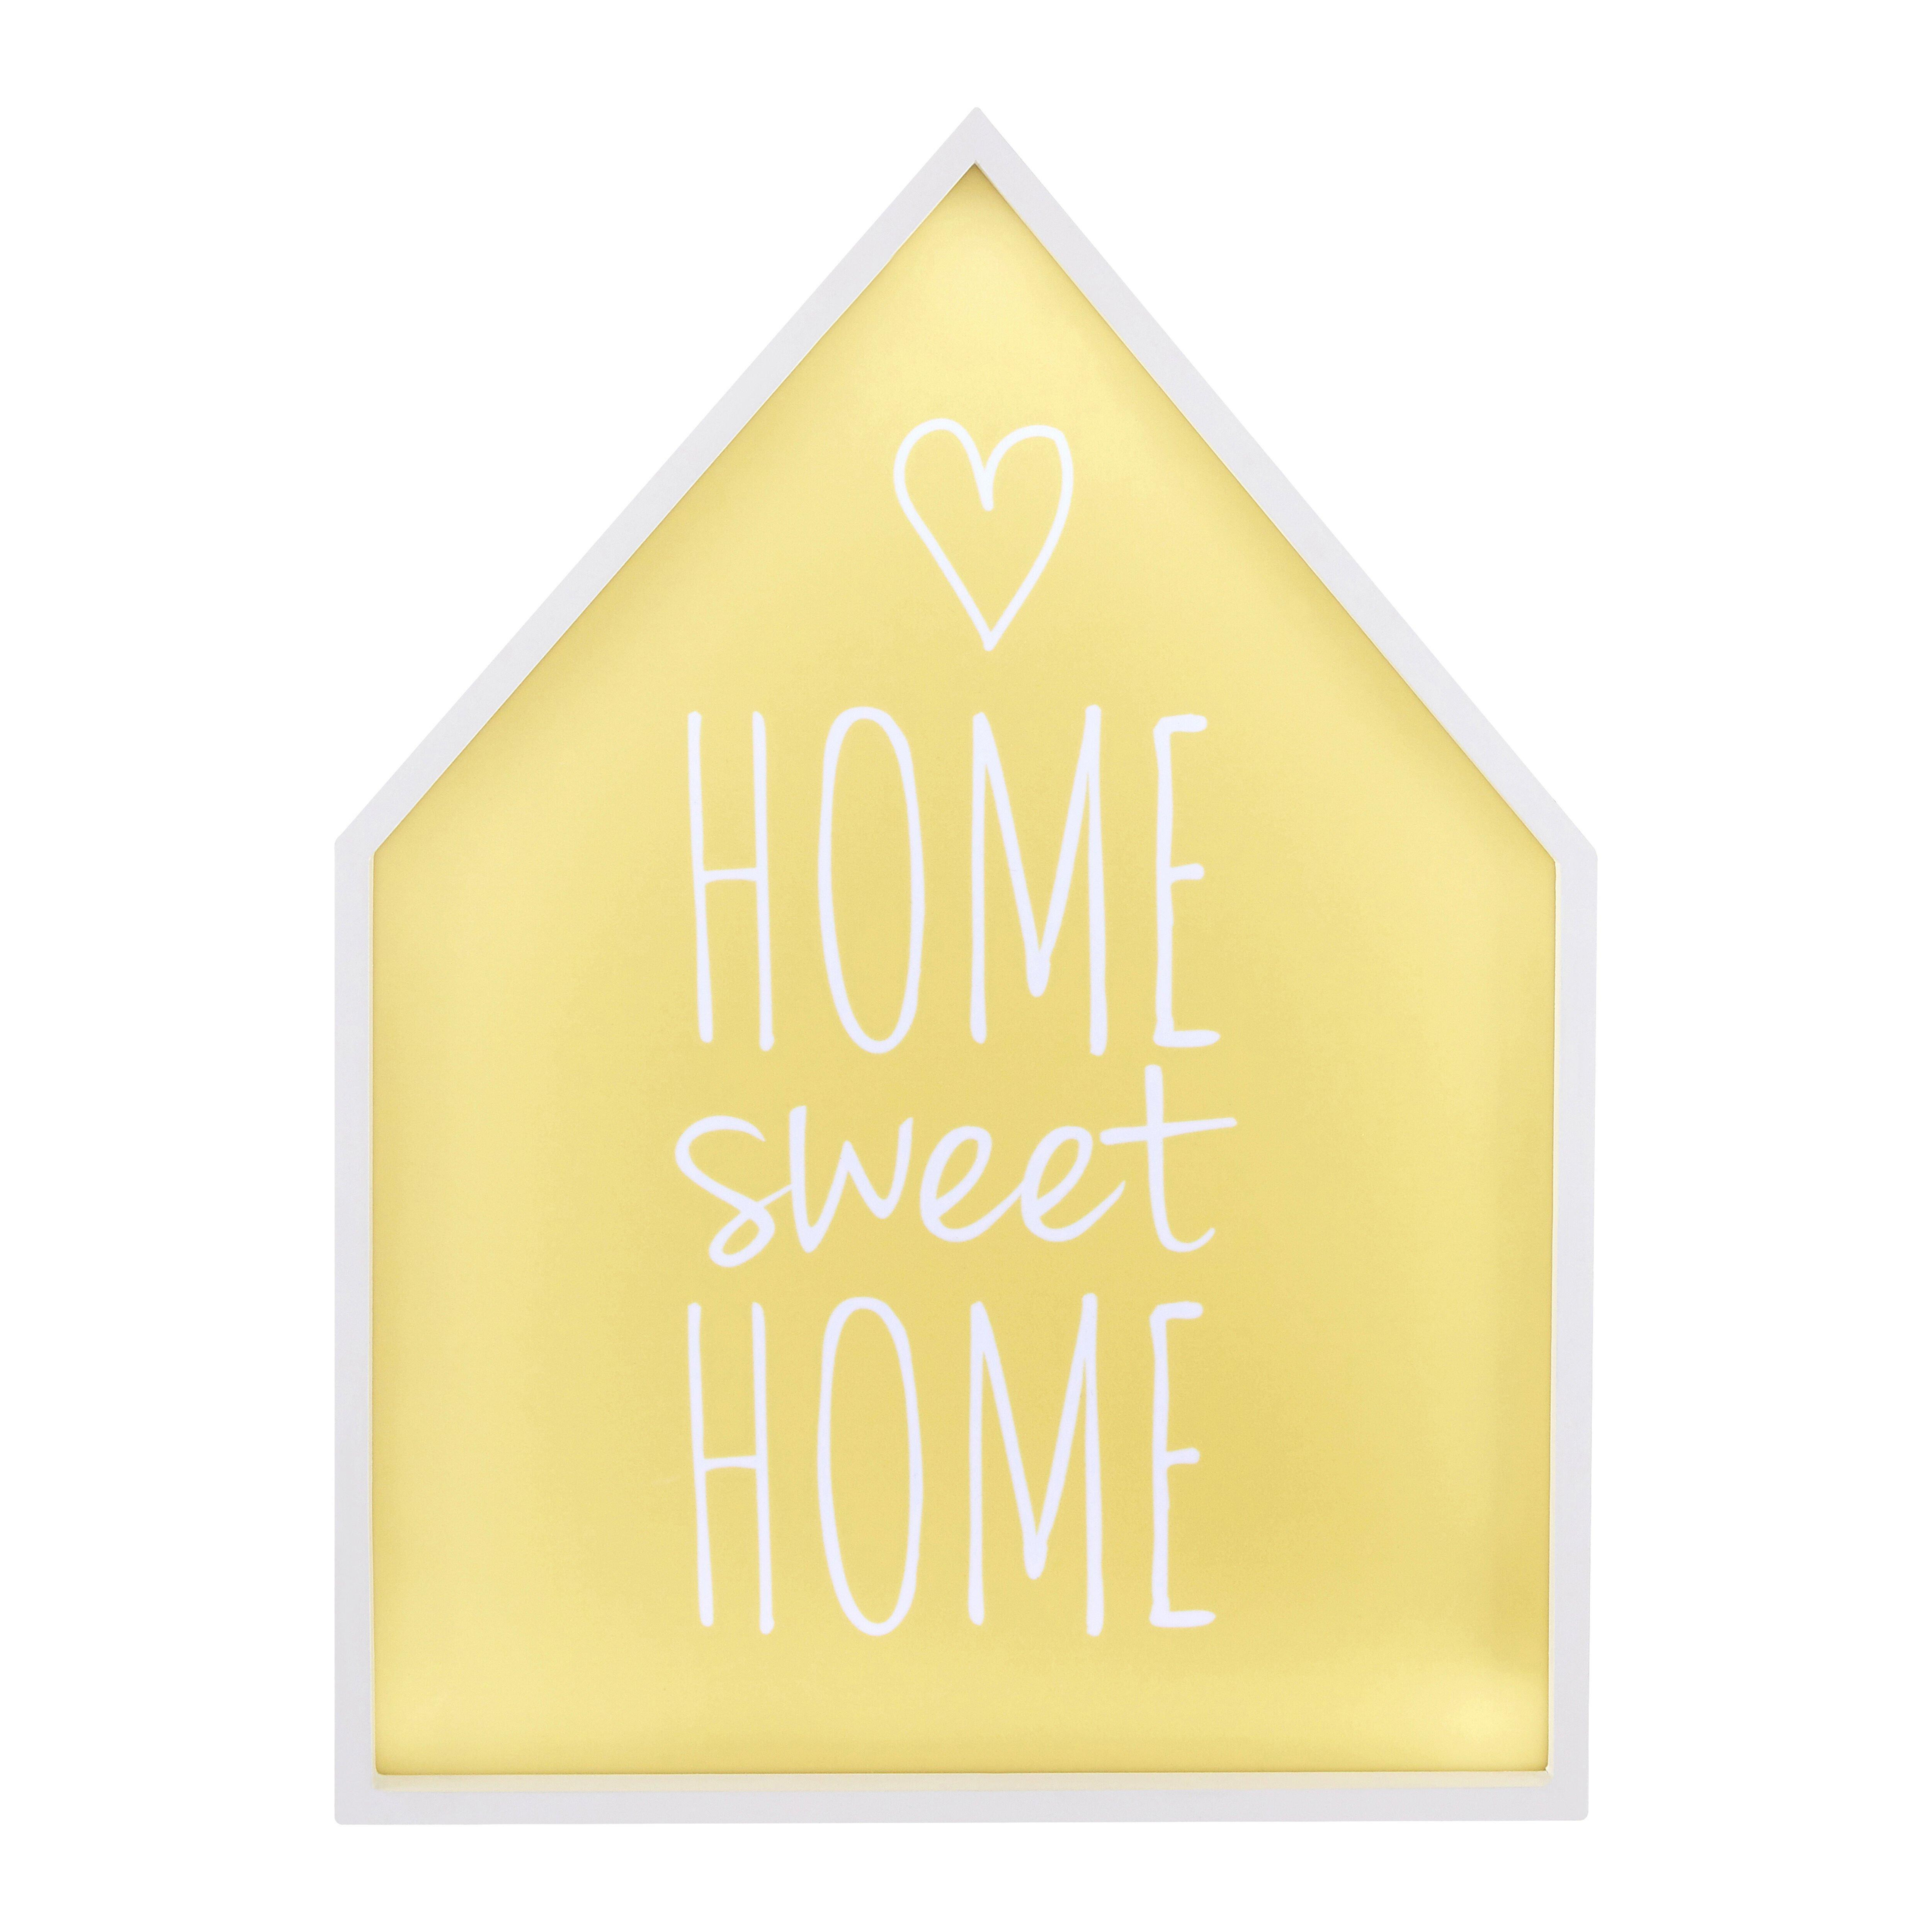 Premier Kids Home Sweet Home LED Light Box - image 1